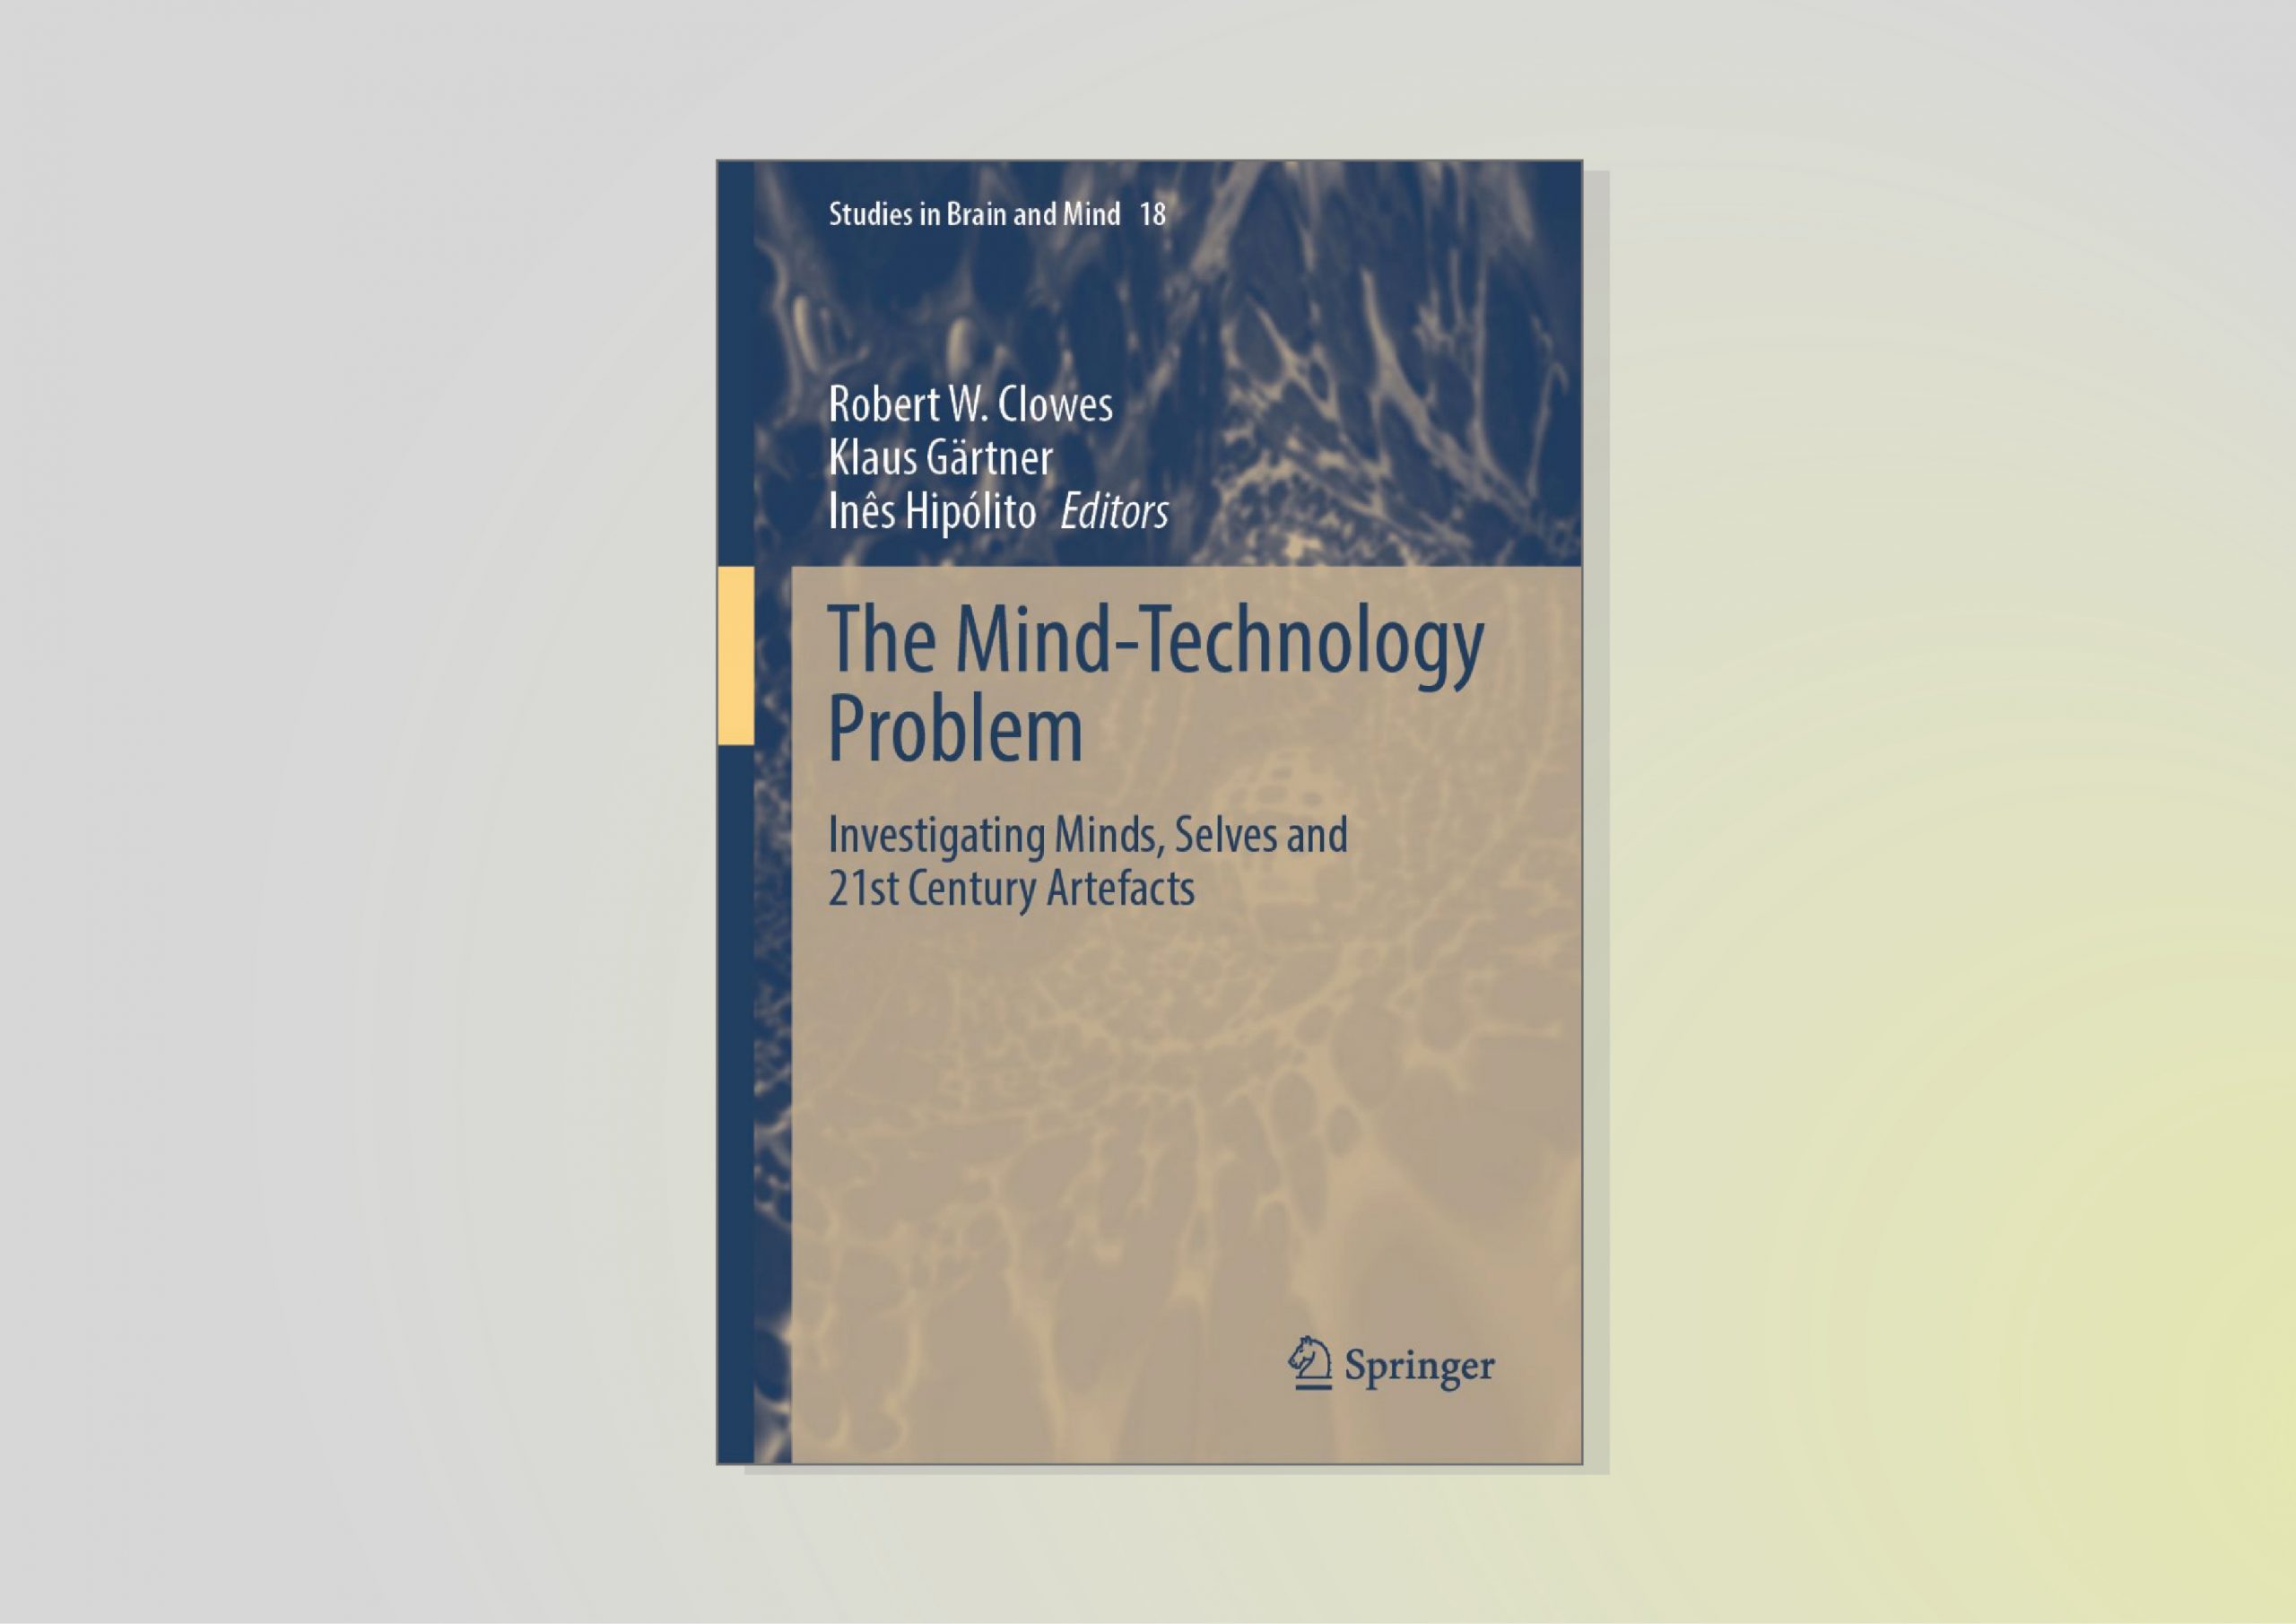 mind technology problem book cover ifilnova